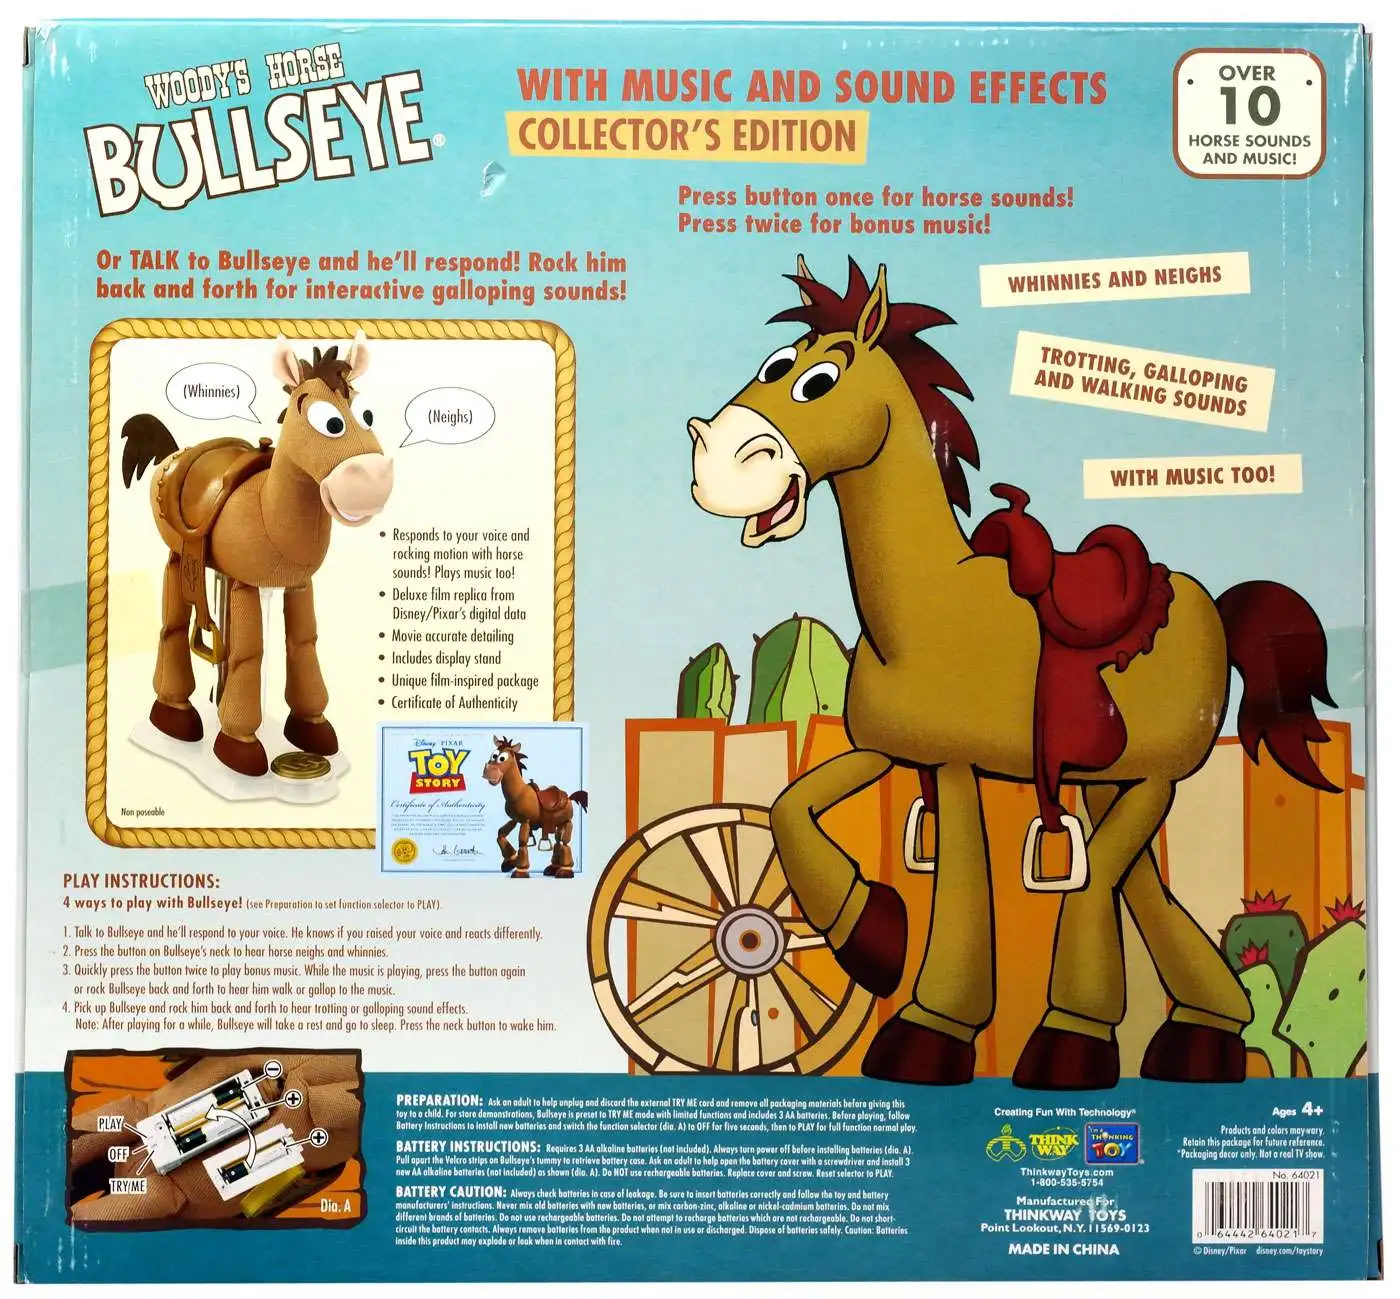 Disney Pixar TOY STORY Collection Signature WOODY'S HORSE BULLSEYE